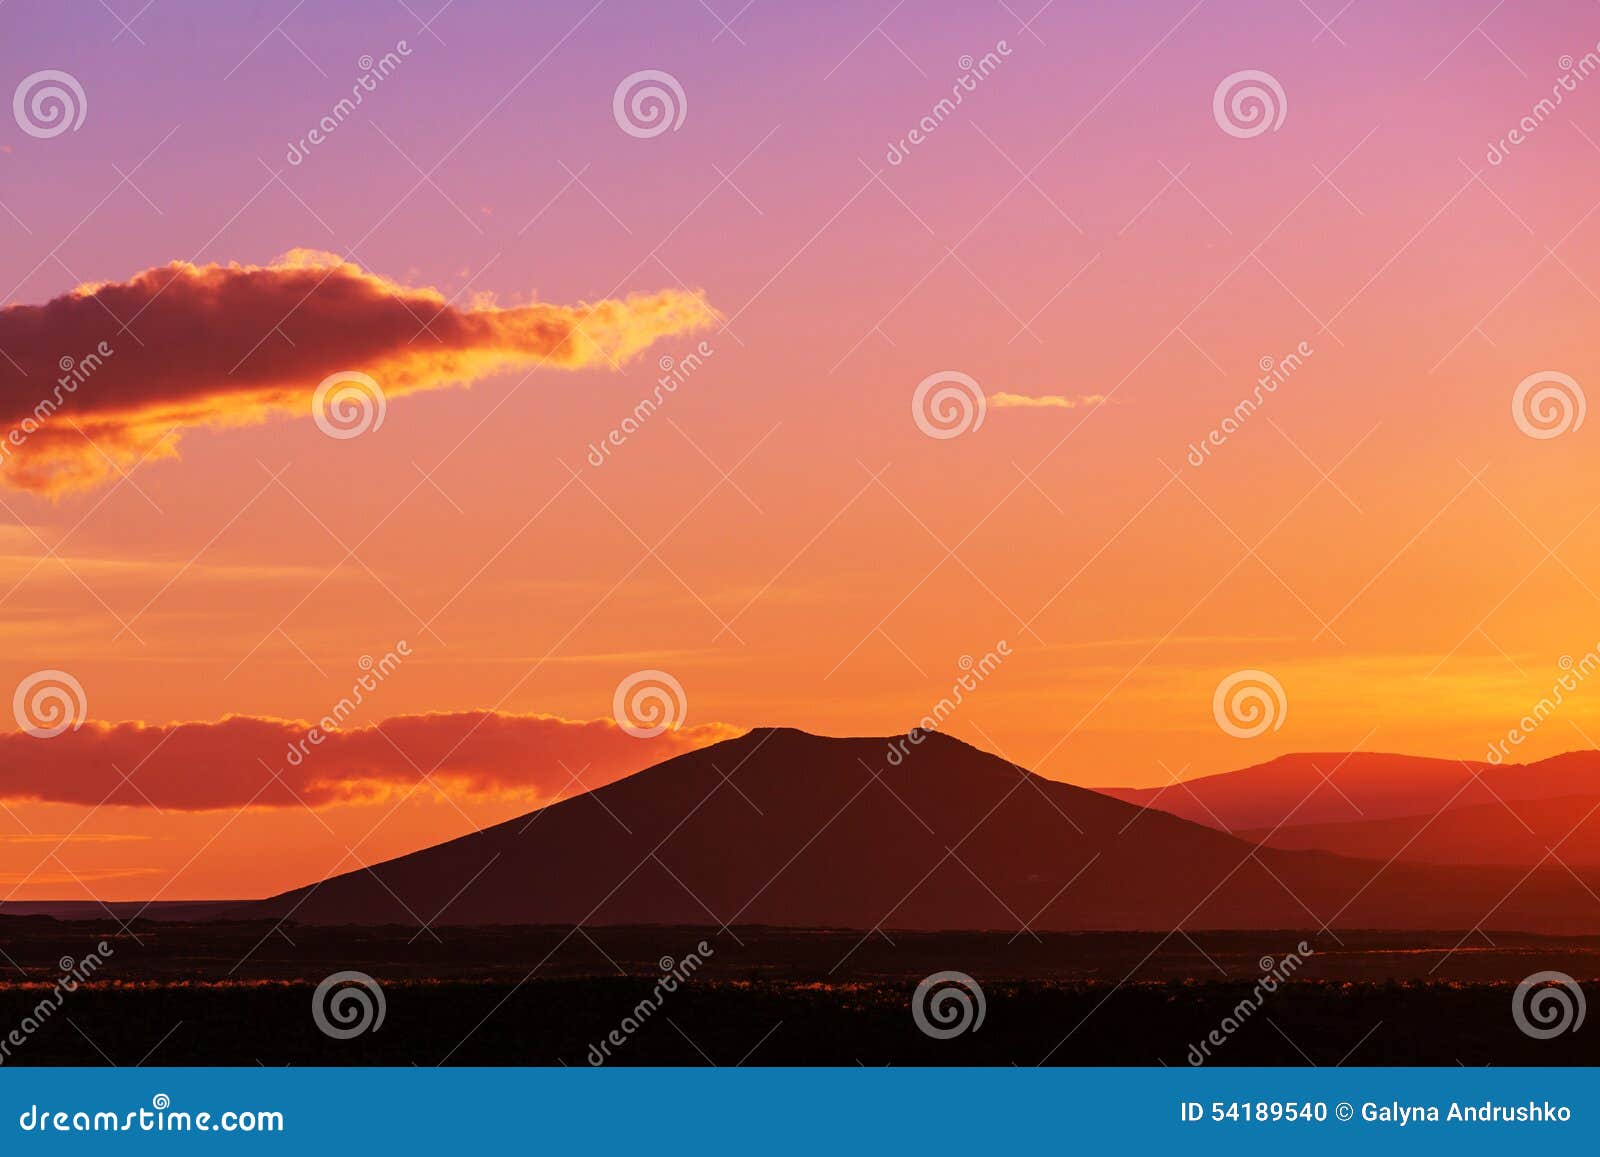 Sunset in Patagonia mountains